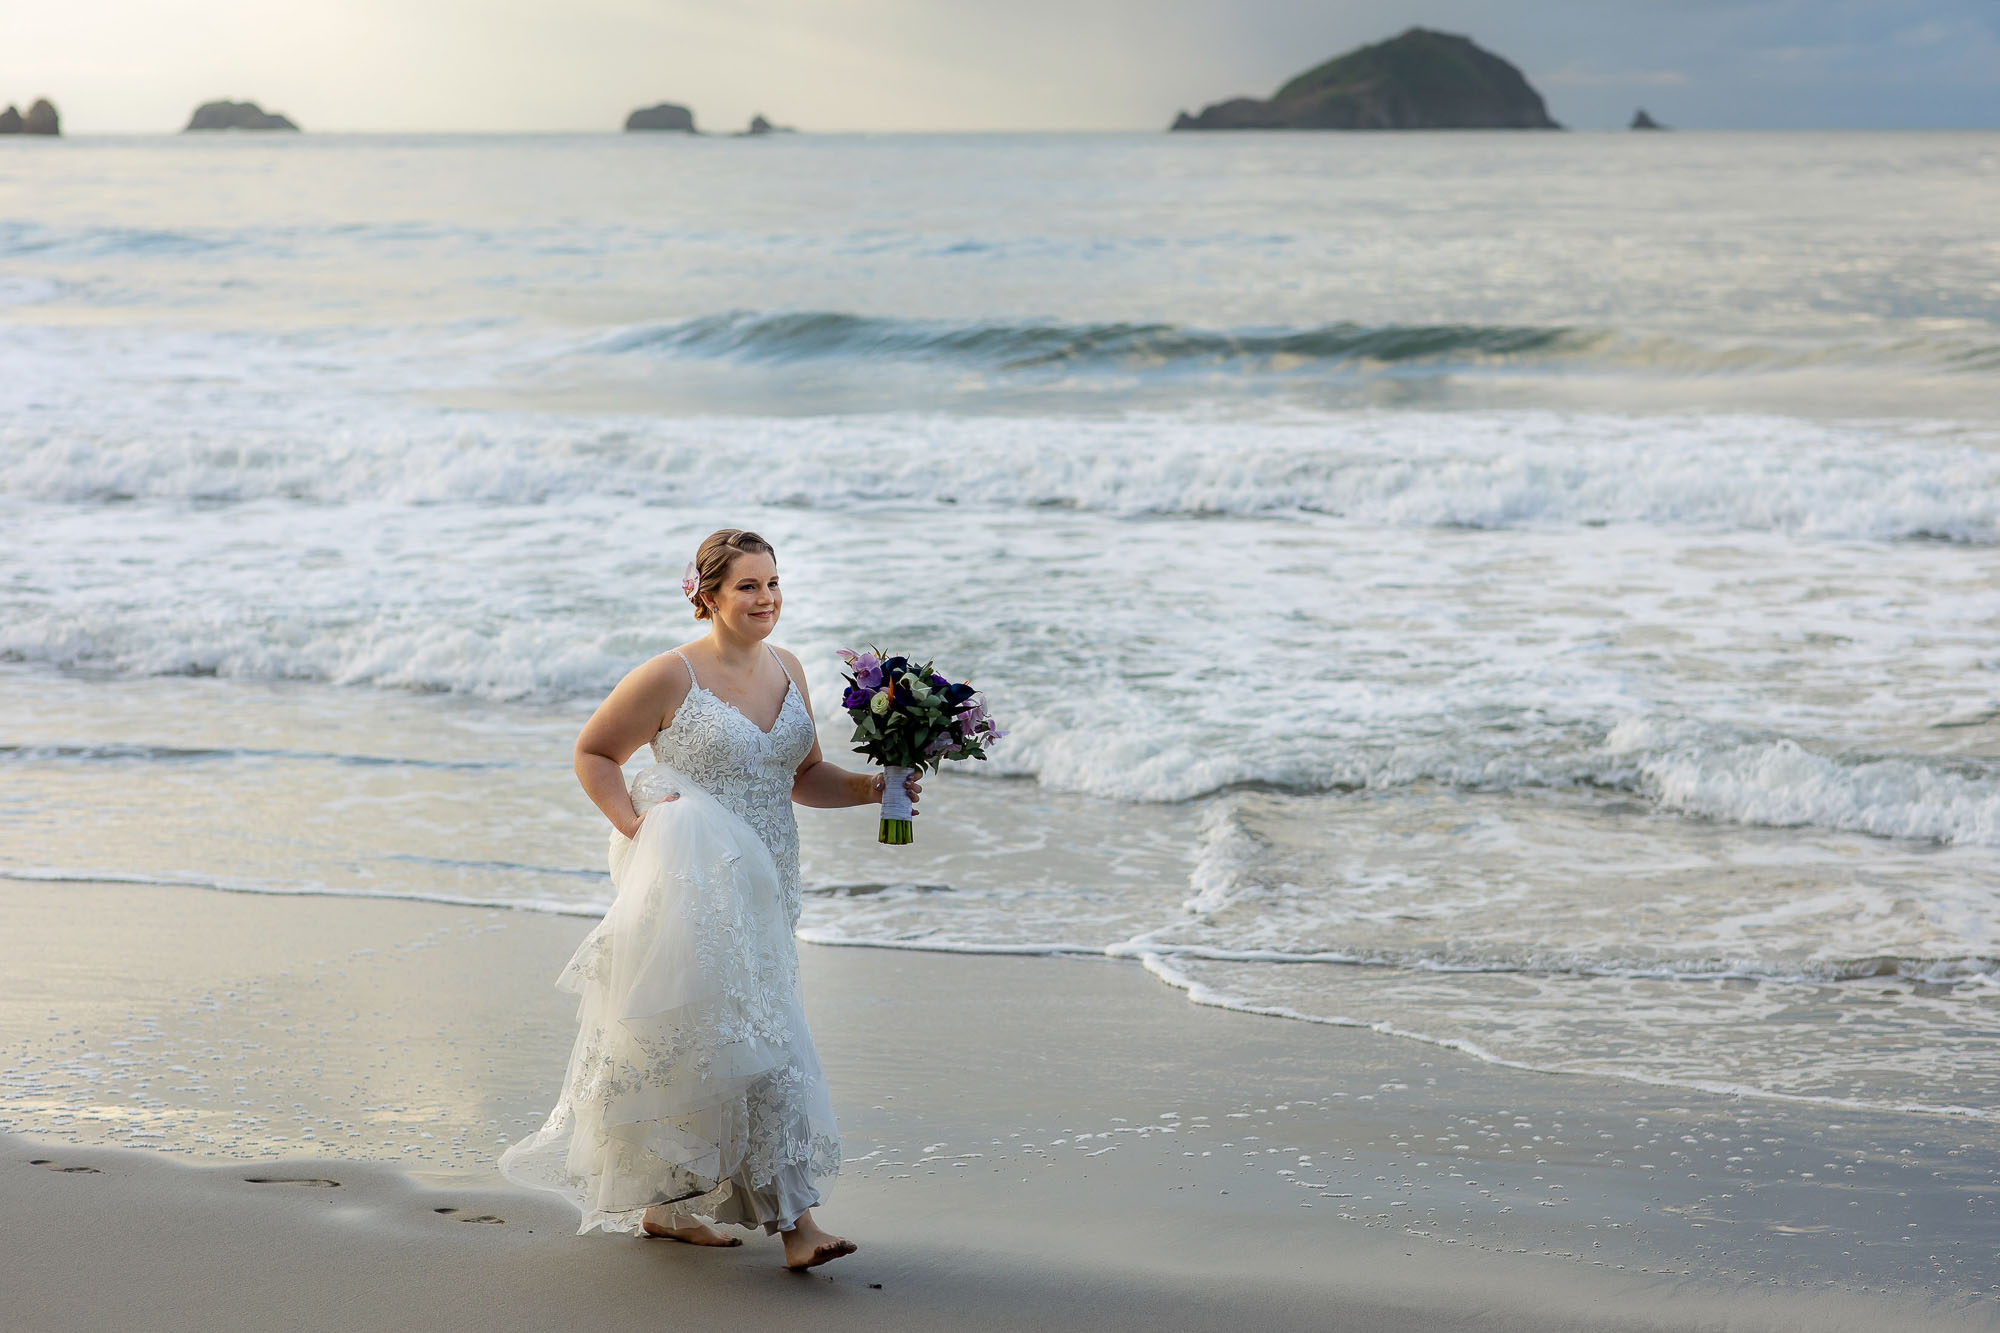 the bride walking along the beach